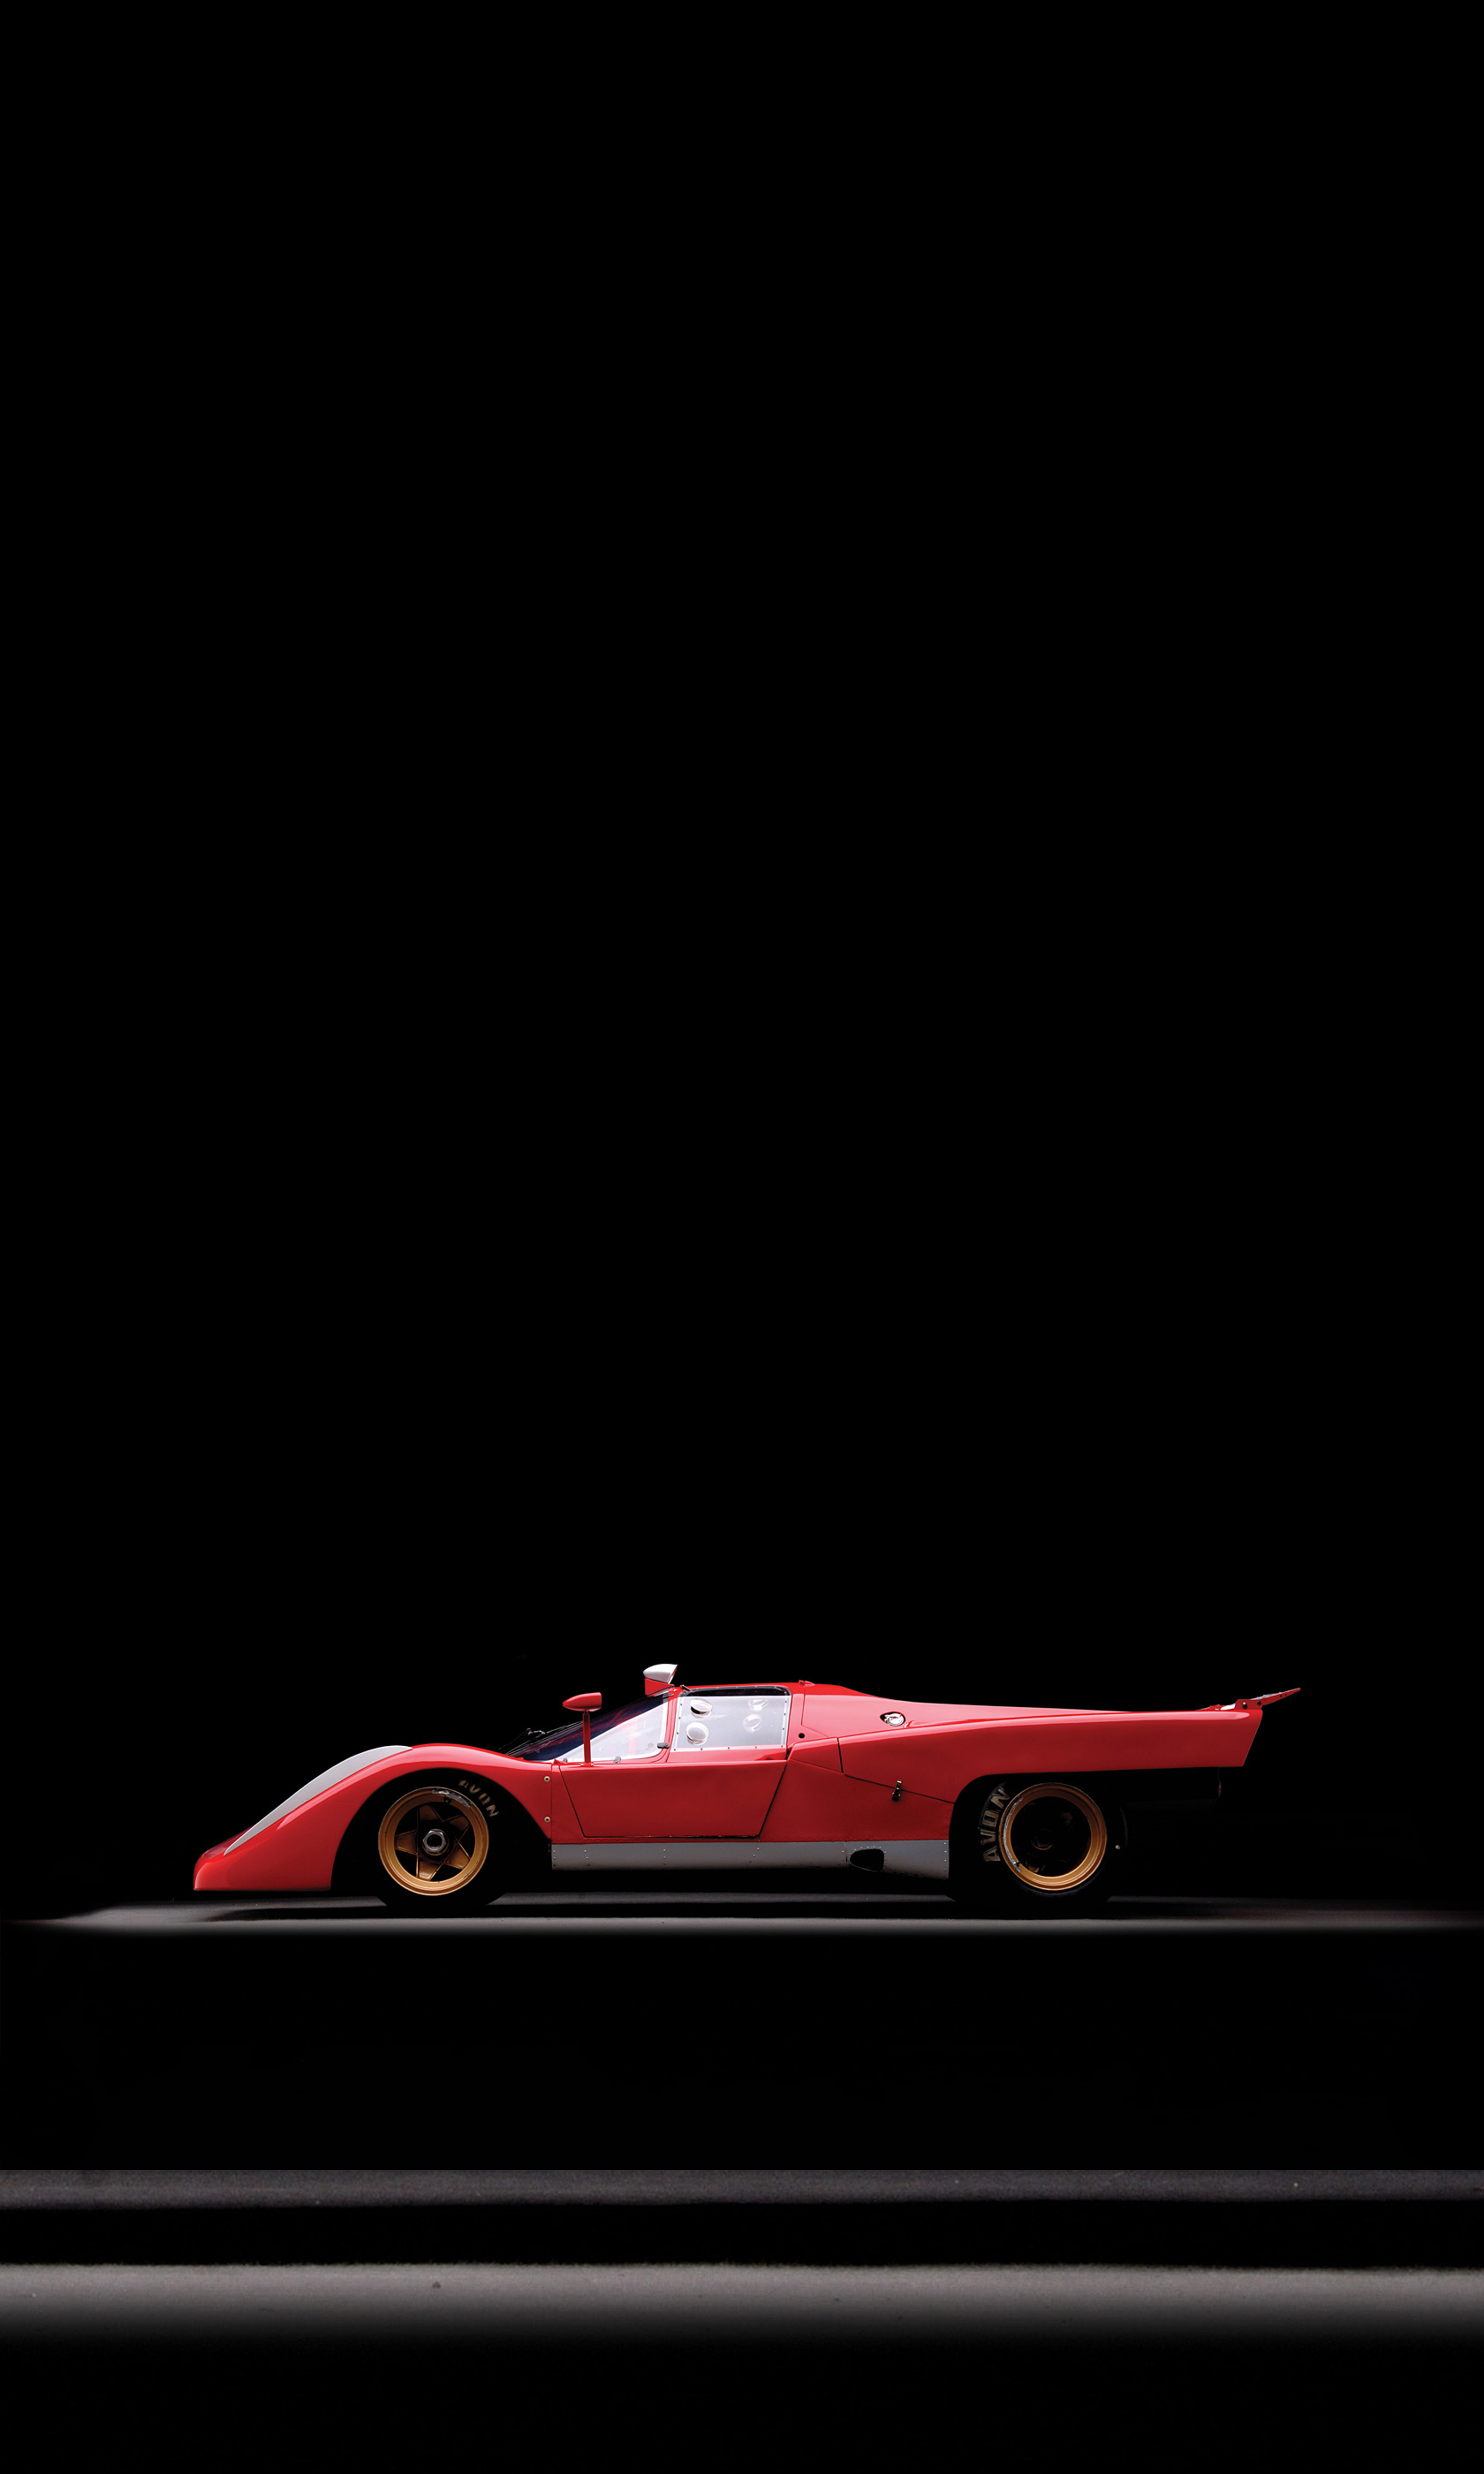  1970 Ferrari 512 M Wallpaper.